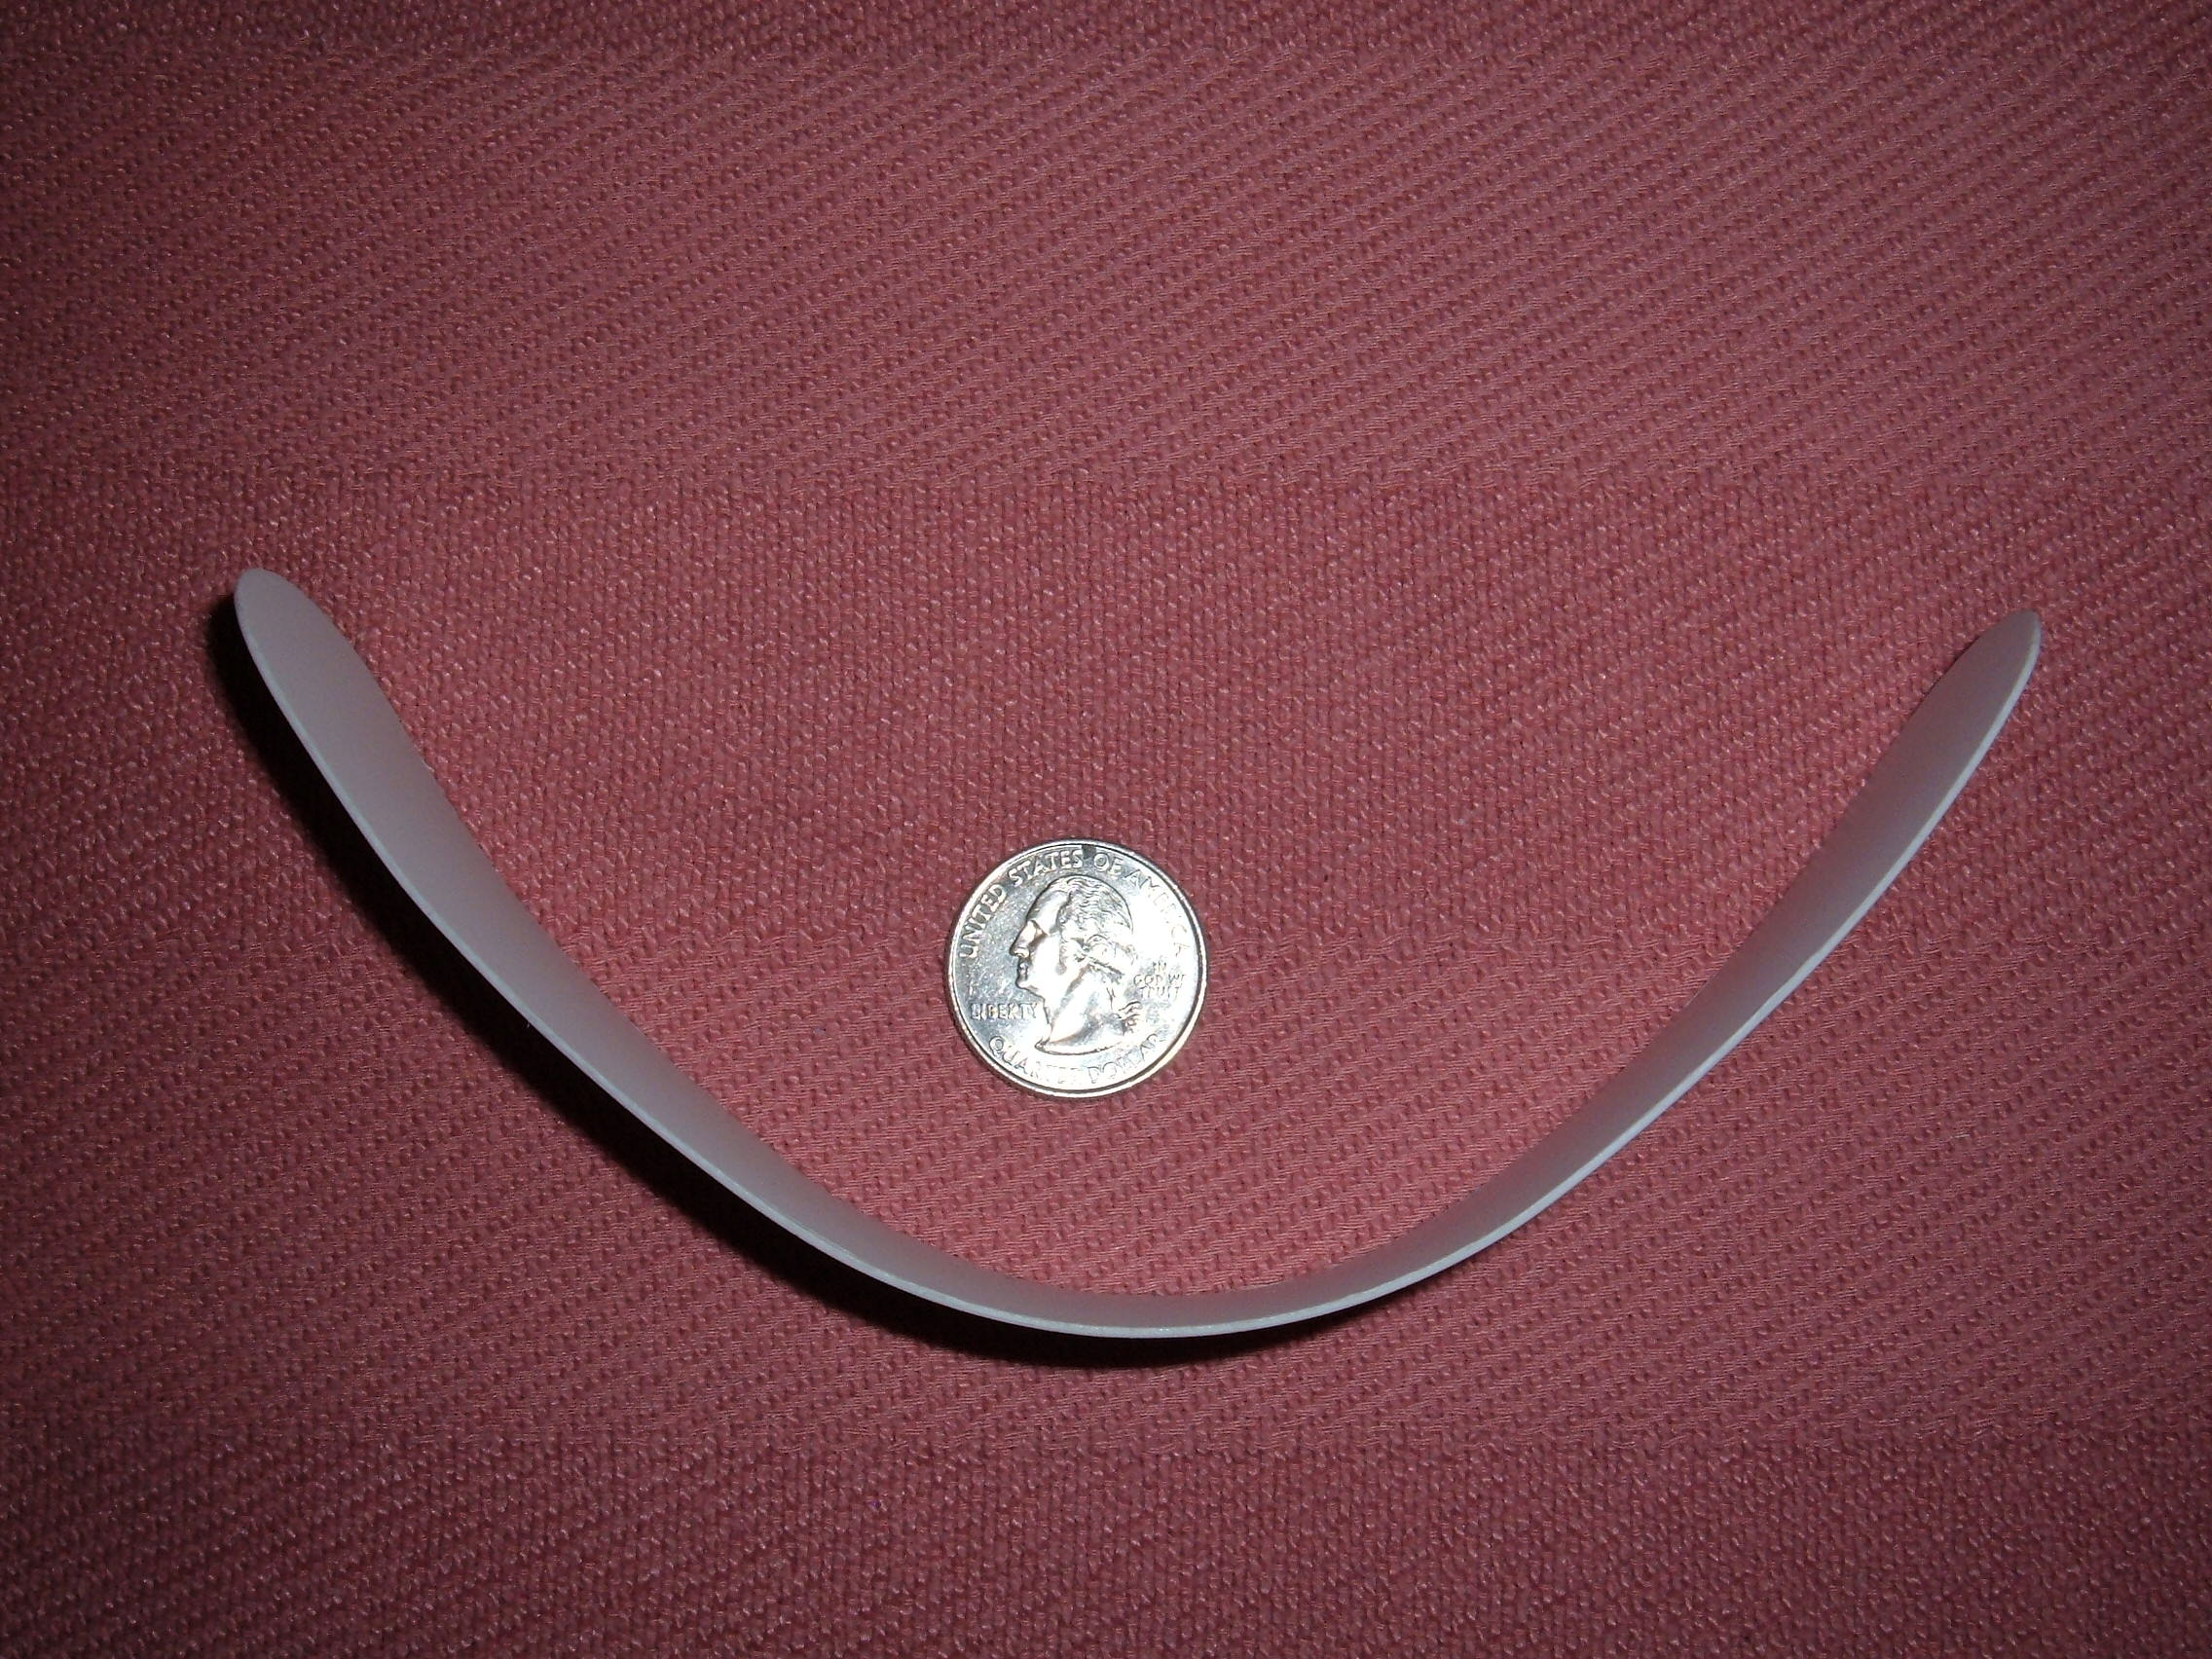 Plastic roman collar compared with US quarter